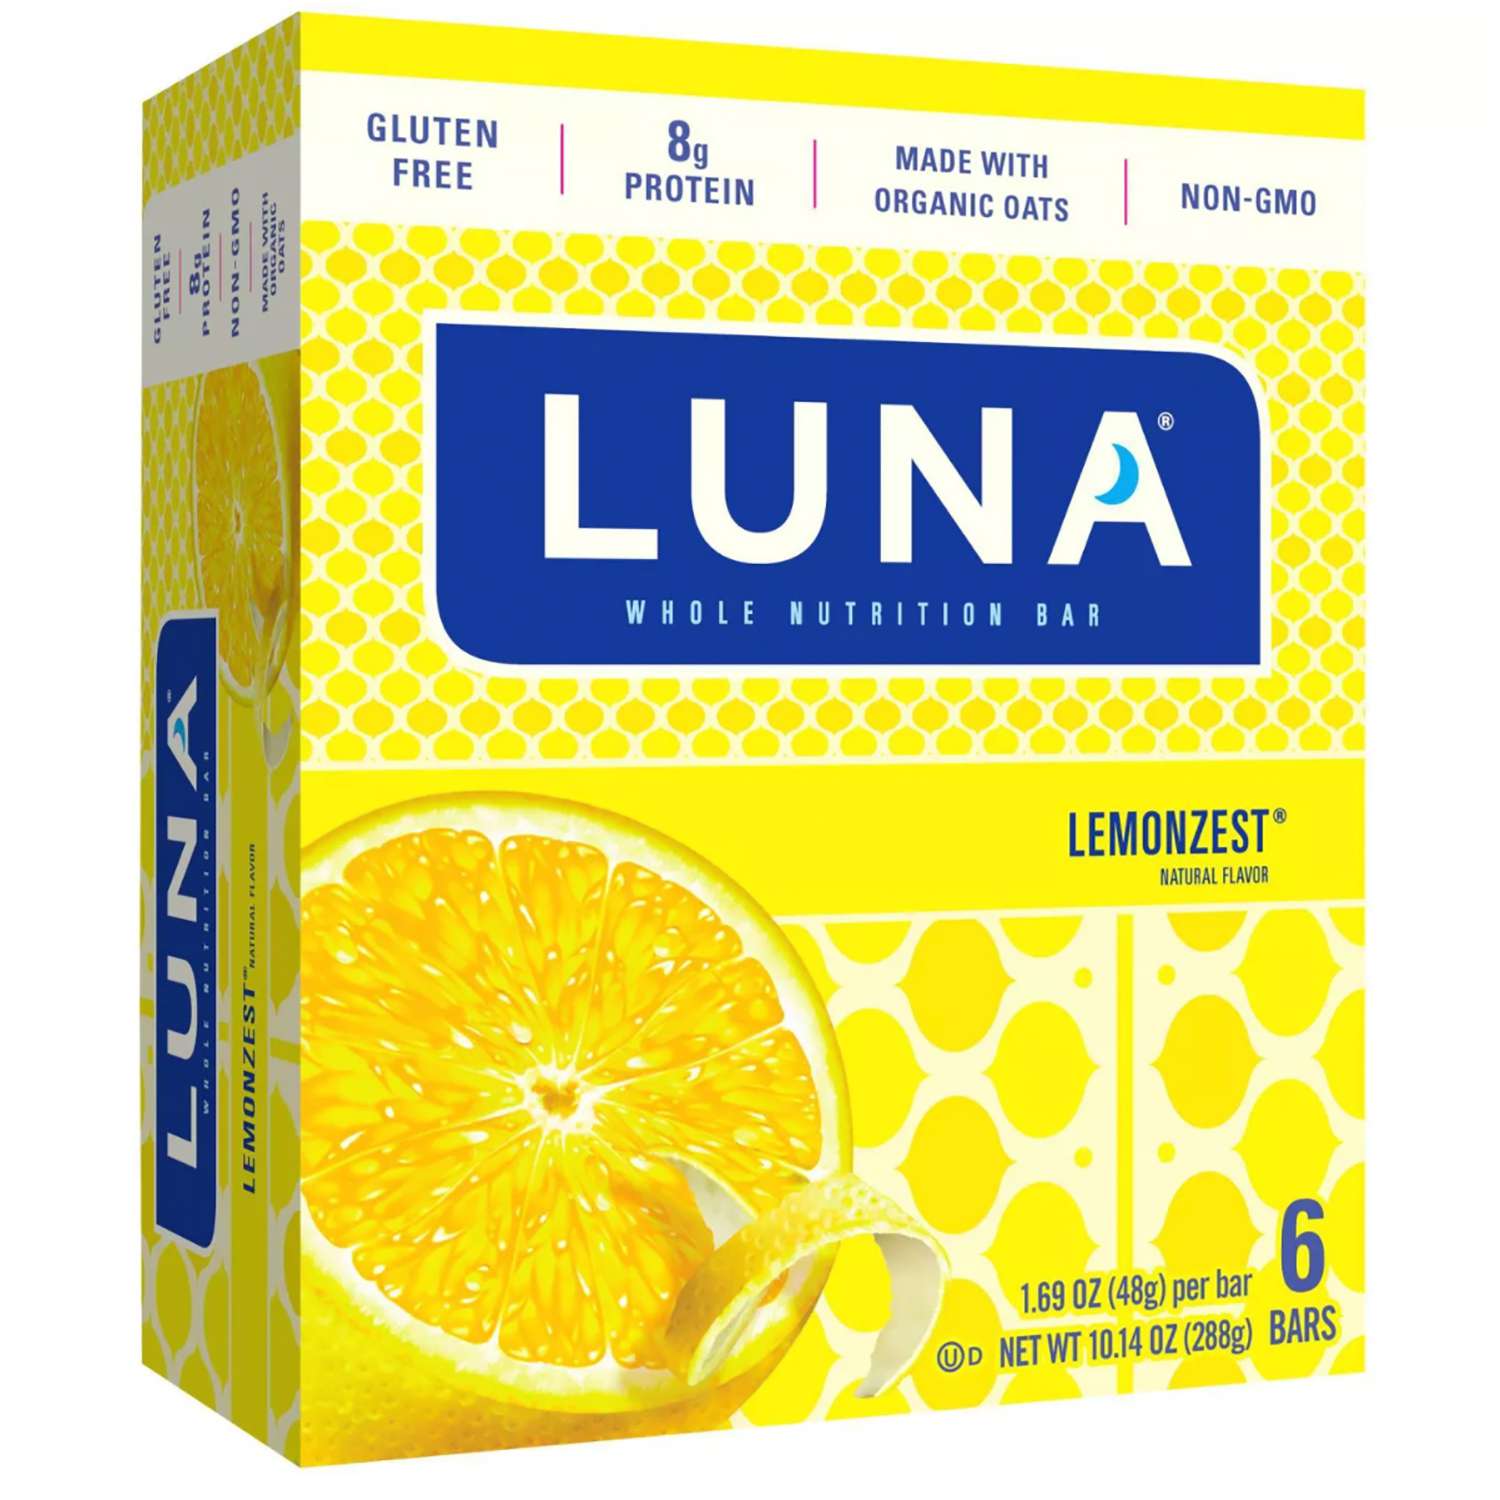 LUNA Whole Nutrition Bars in LemonZest